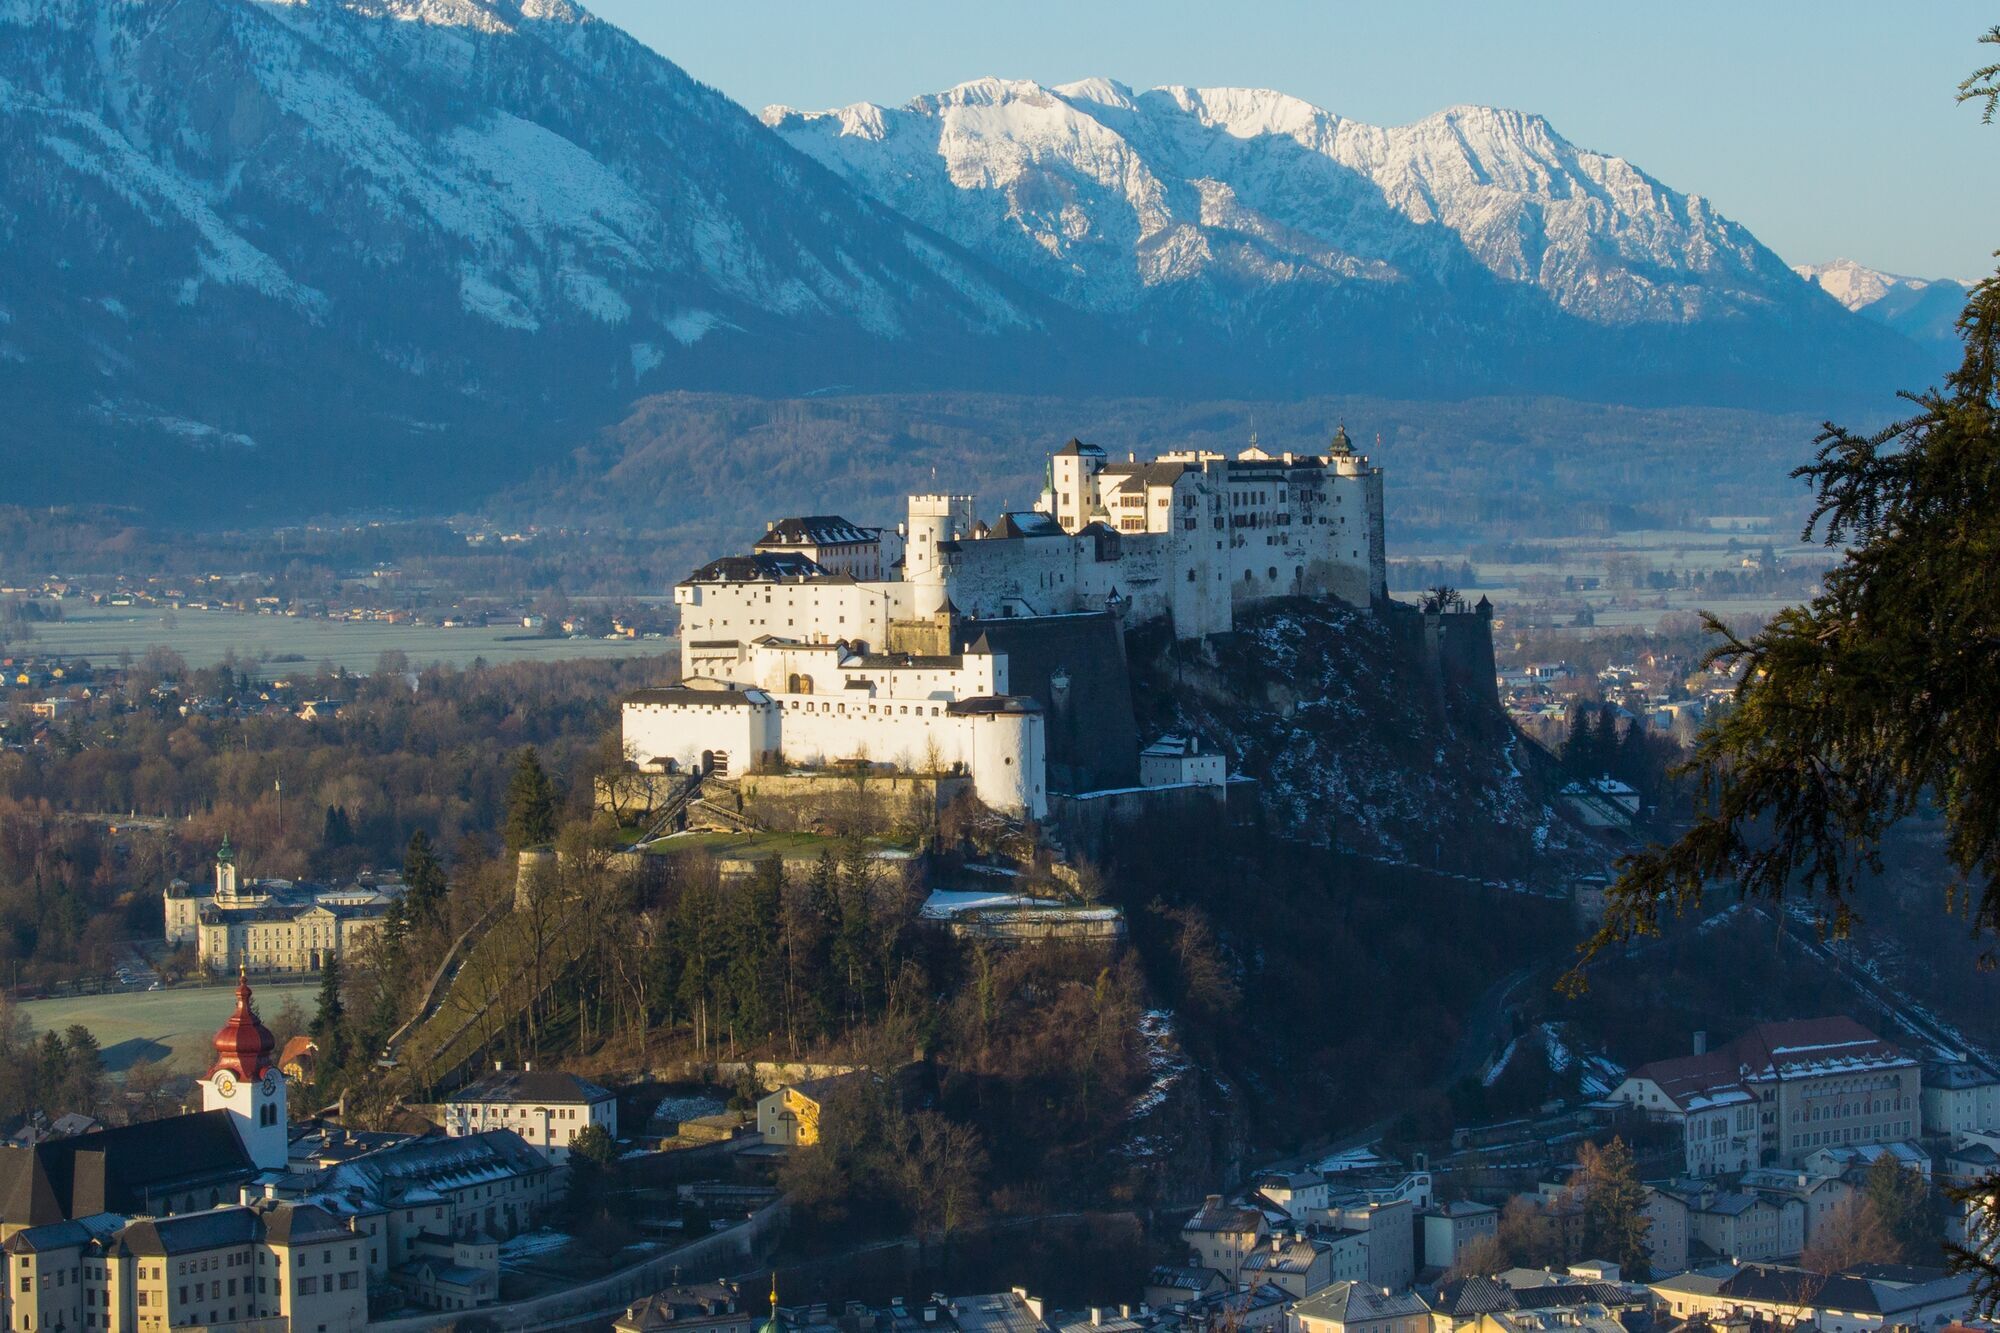 European vacation in Salzburg: What to visit